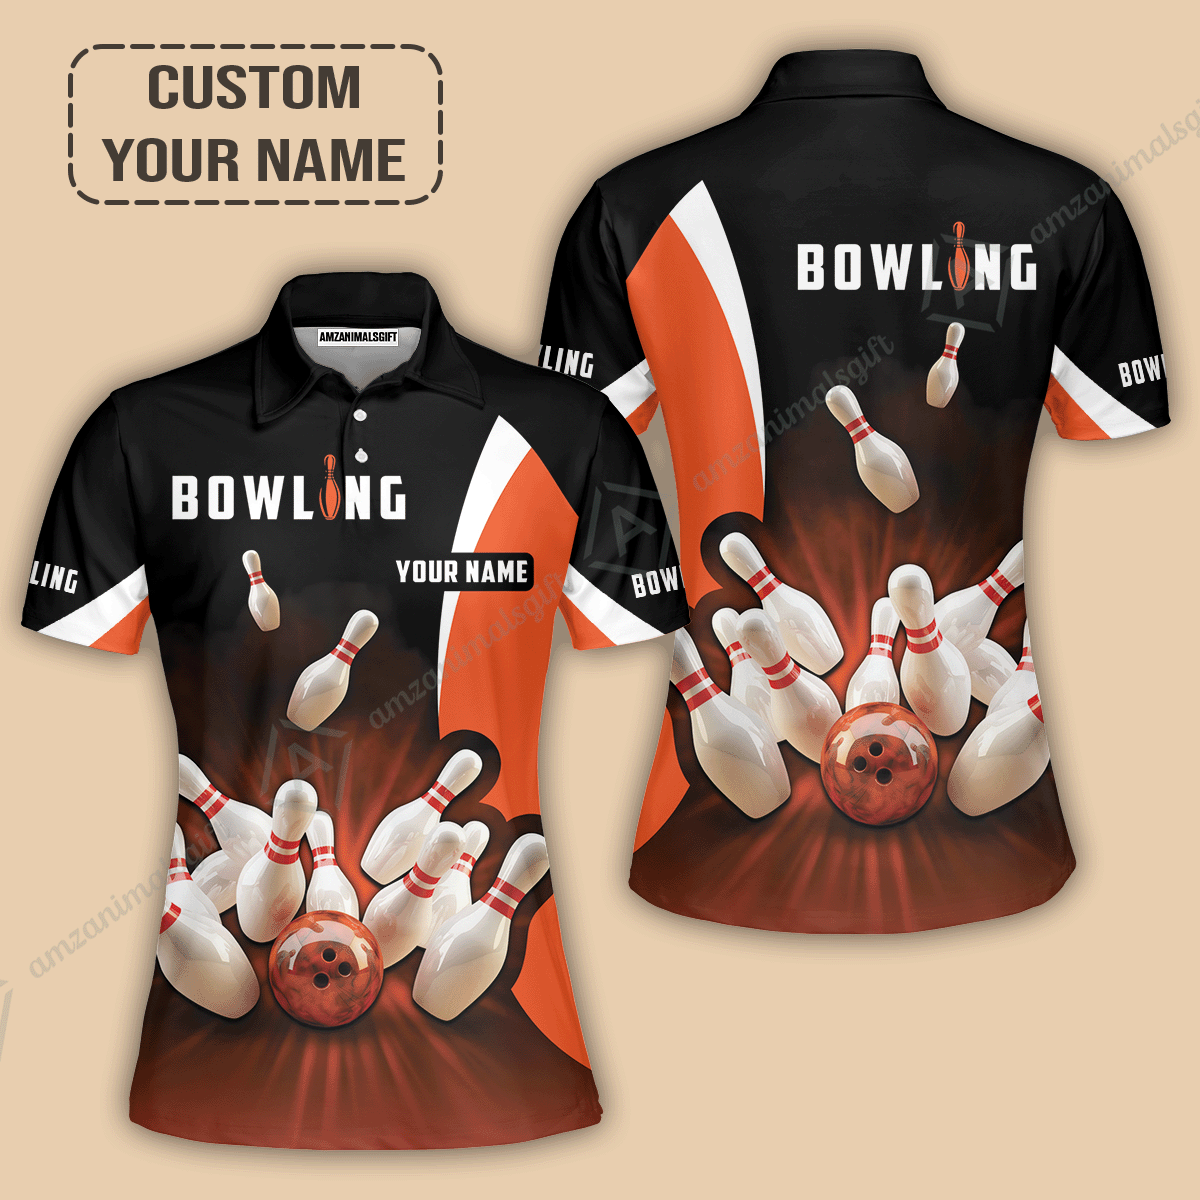 Customized Bowling Hoodie, Ten Pin Strike Bowling Personalized Orange Black Shirt For Friend, Family, Bowling Players